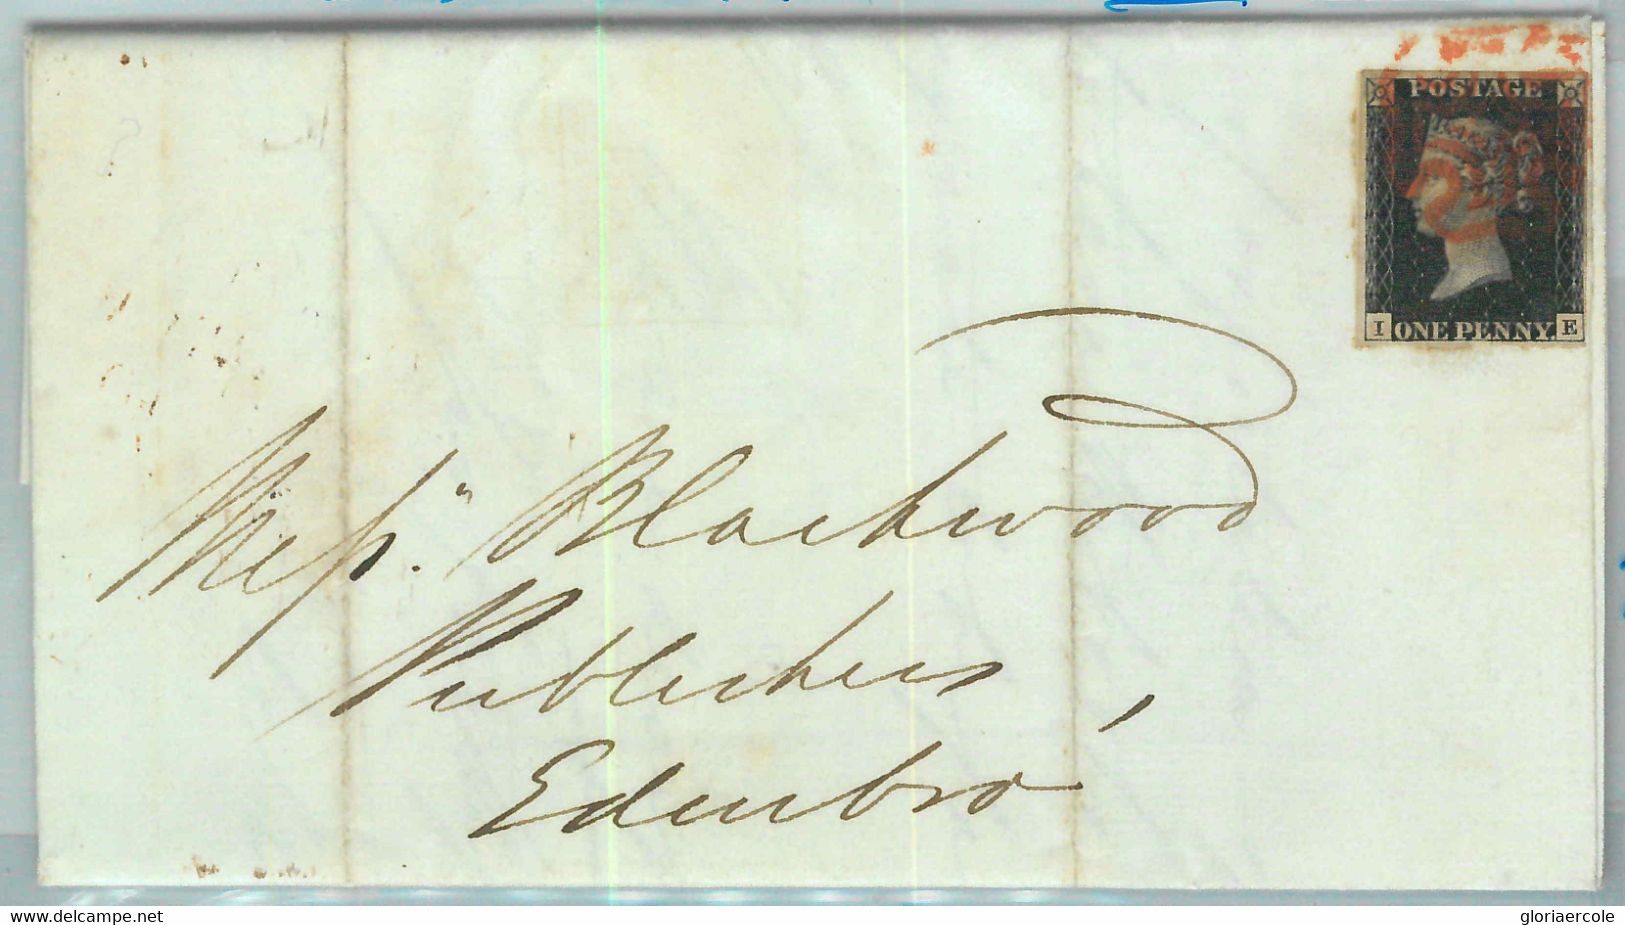 BK0660 - GB Great Brittain - POSTAL HISTORY - PENNY BLACK  On COVER October 1840 - Briefe U. Dokumente